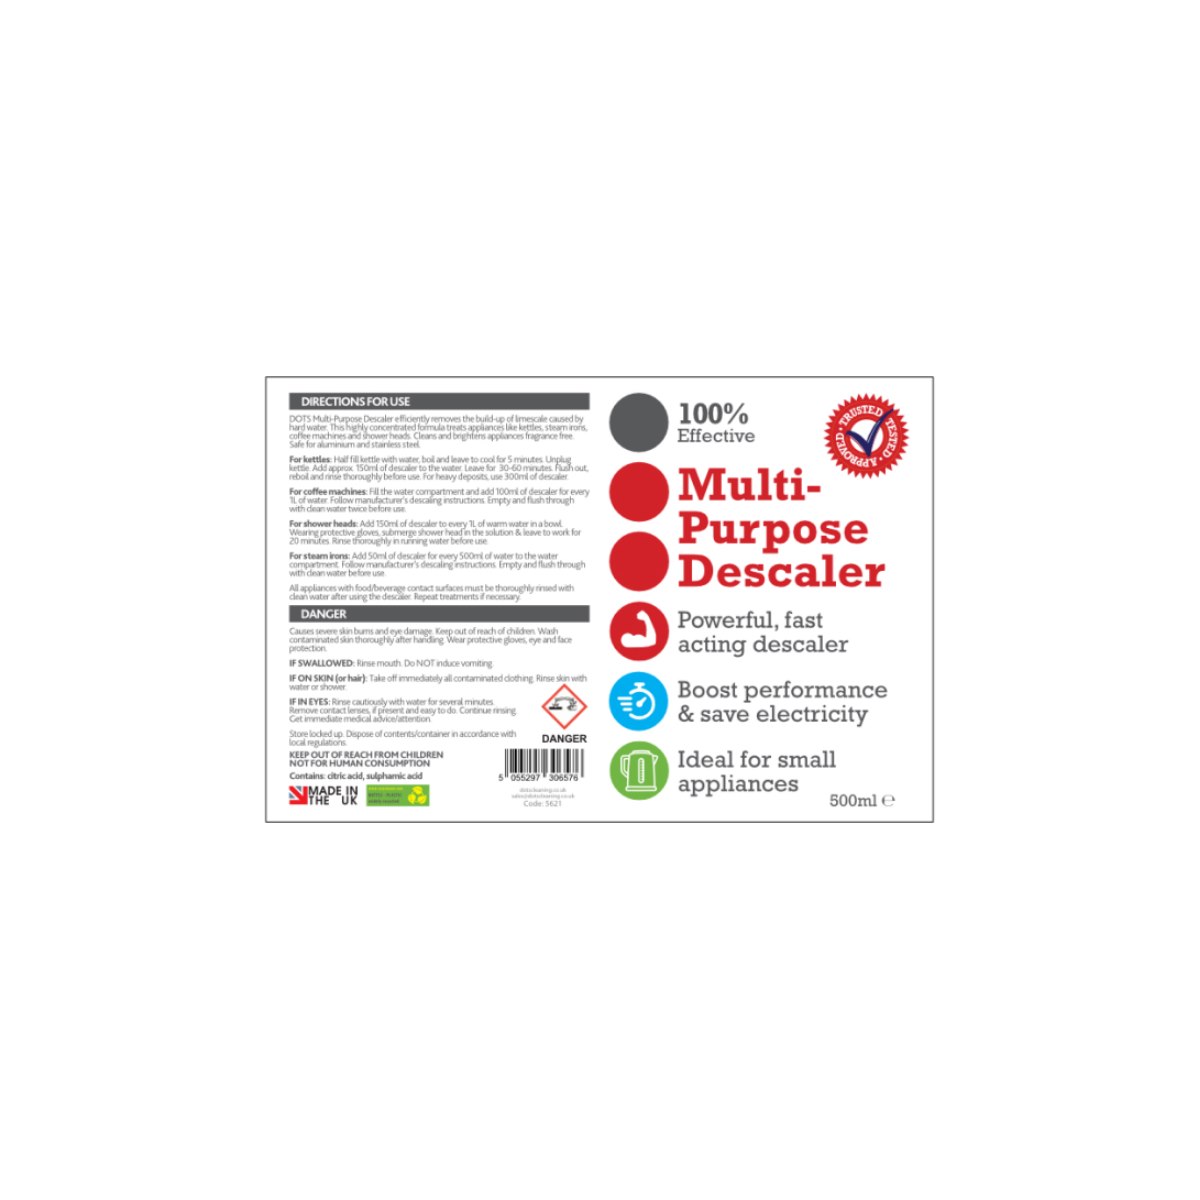 Dots Multi-Purpose Descaler Instructions